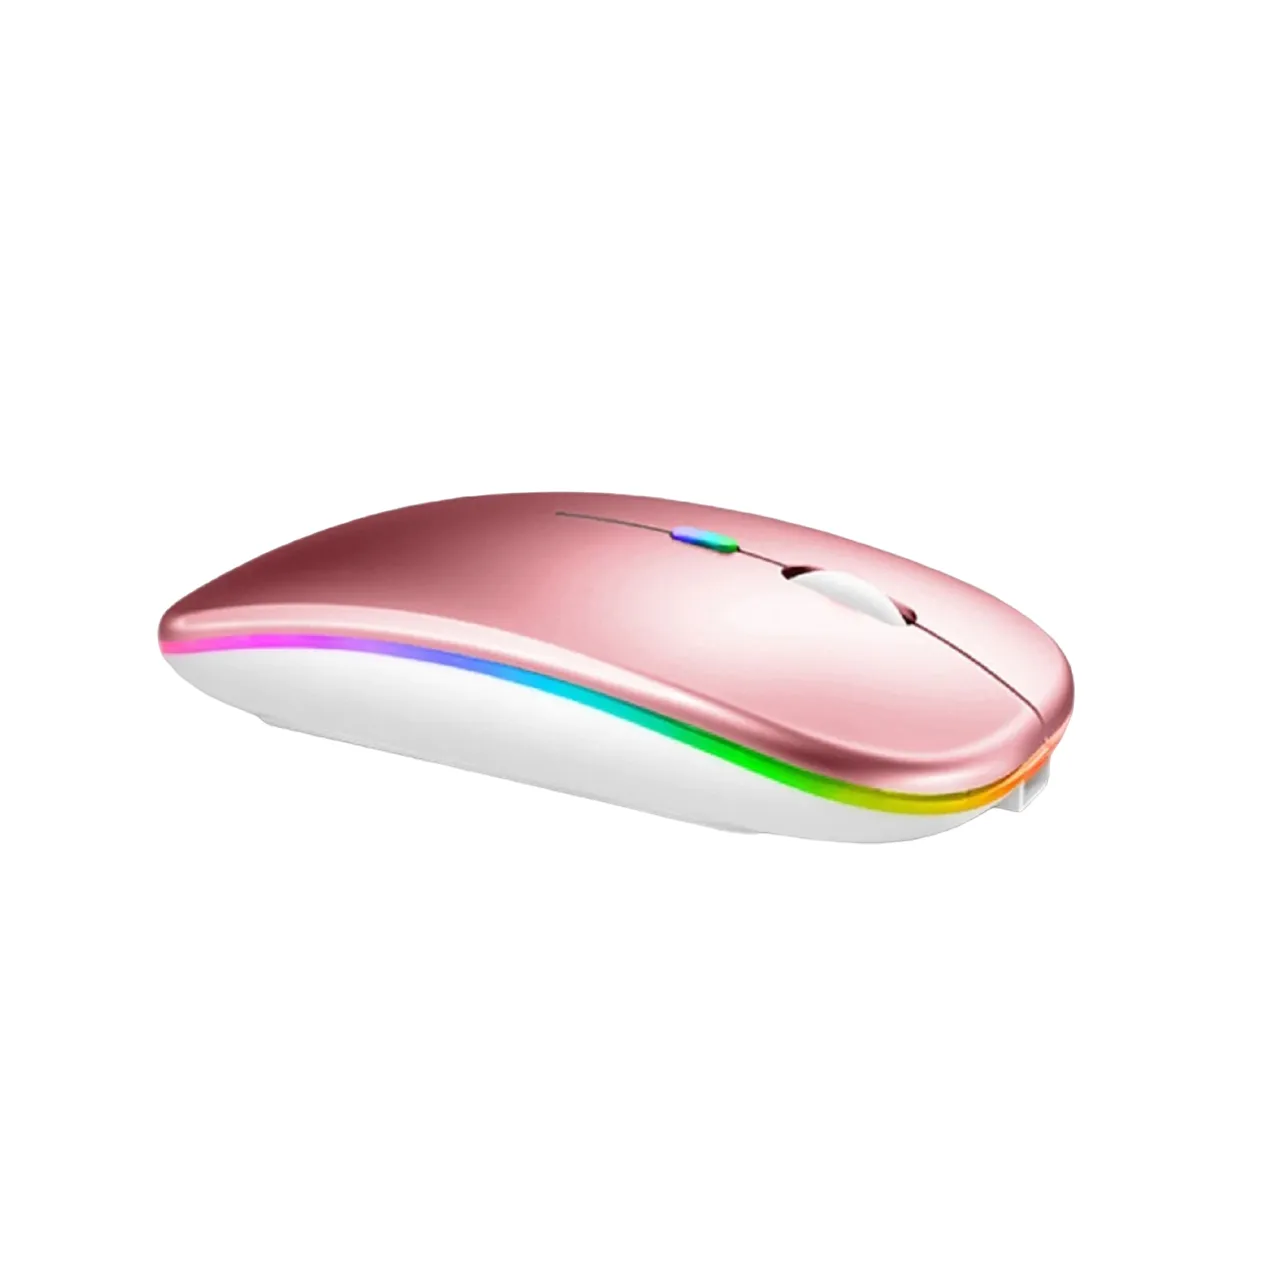 Mouse Ratón Recargable Inalámbrico Y Bluetooth Led Gaming